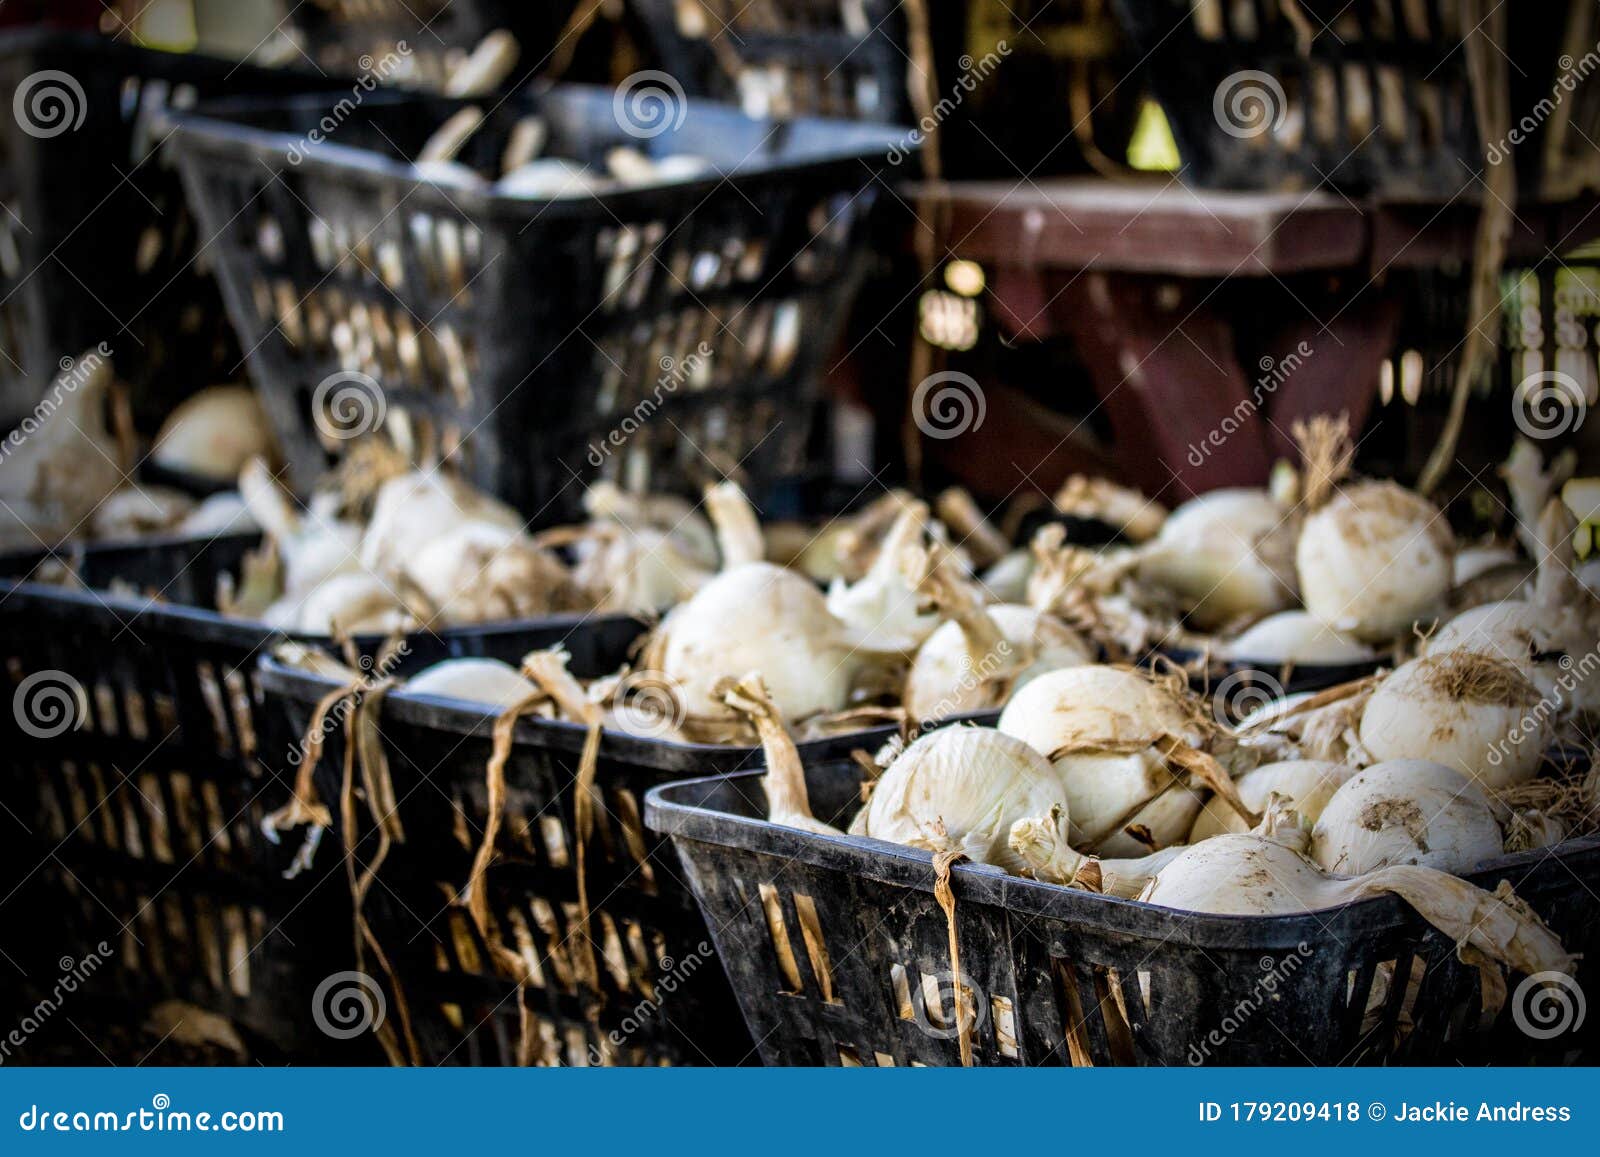 close up of garlic in baskets